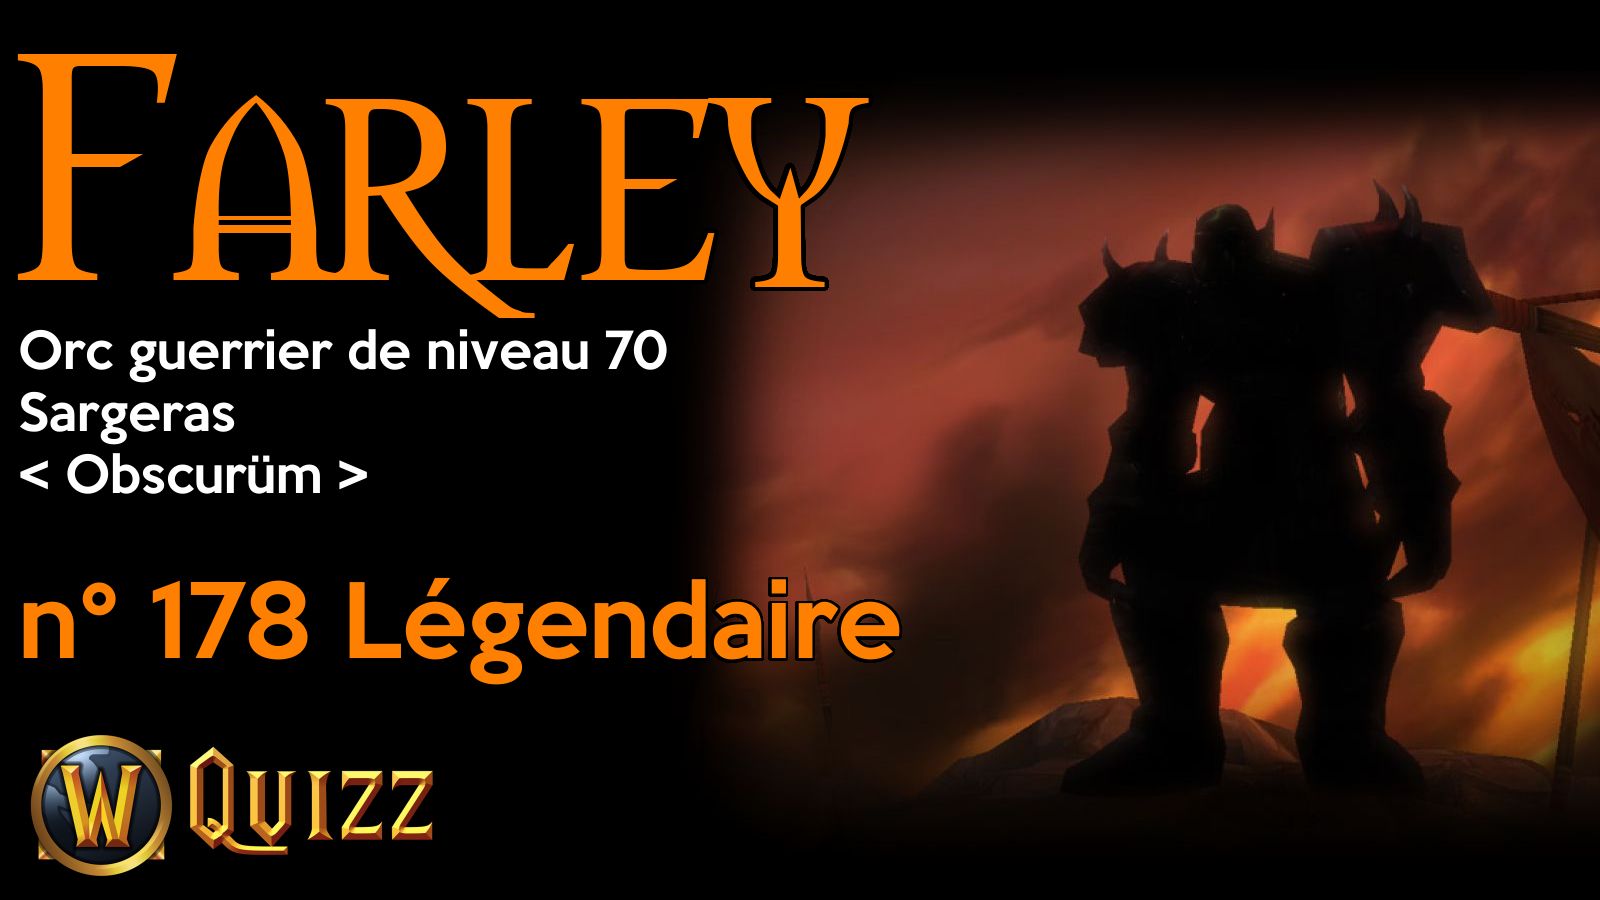 Farley, Orc guerrier de niveau 70, Sargeras